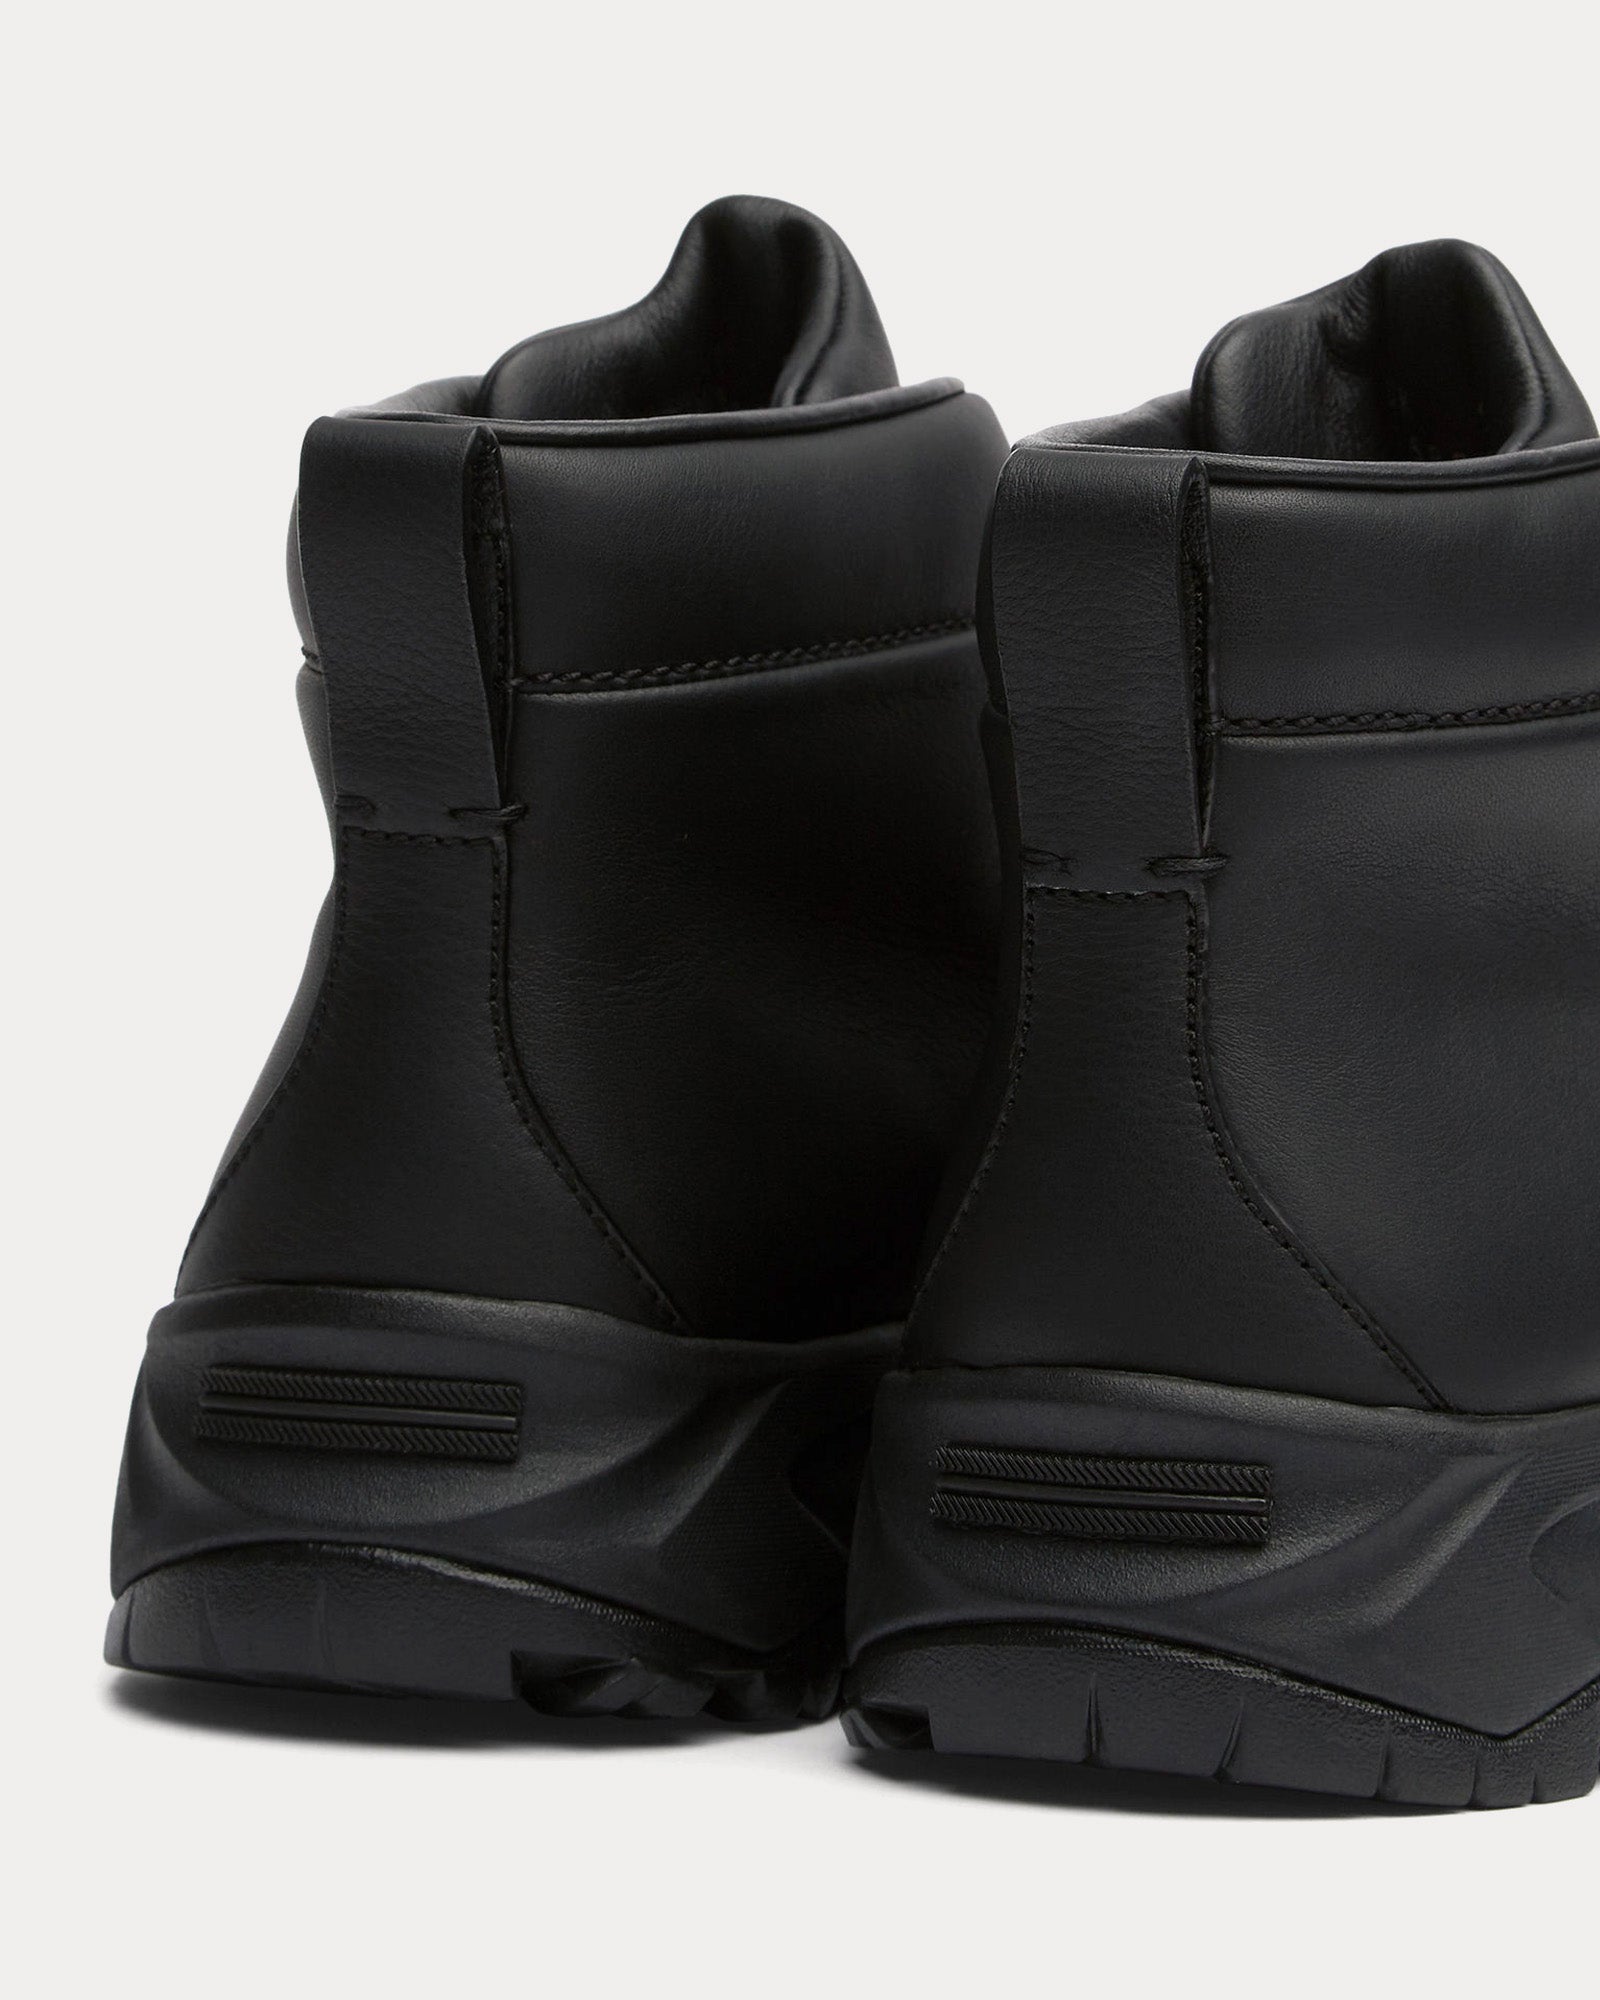 Zegna - Triple Stitch Vetta Leather Black High Top Sneakers